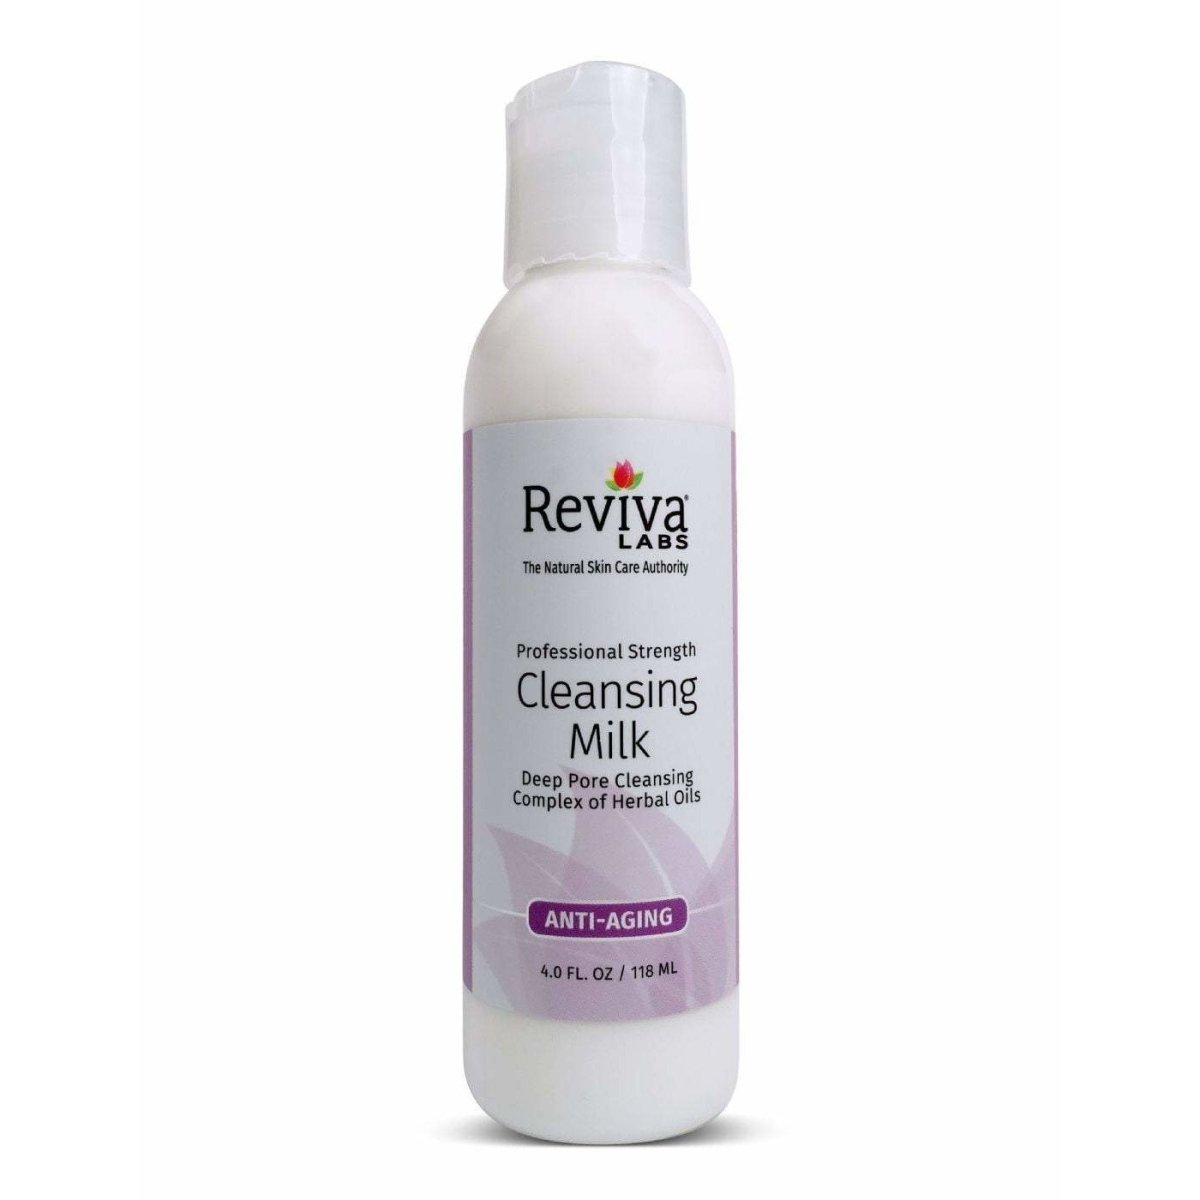 Reviva - Organic Cleansing Milk, 4 oz lotion 118ml